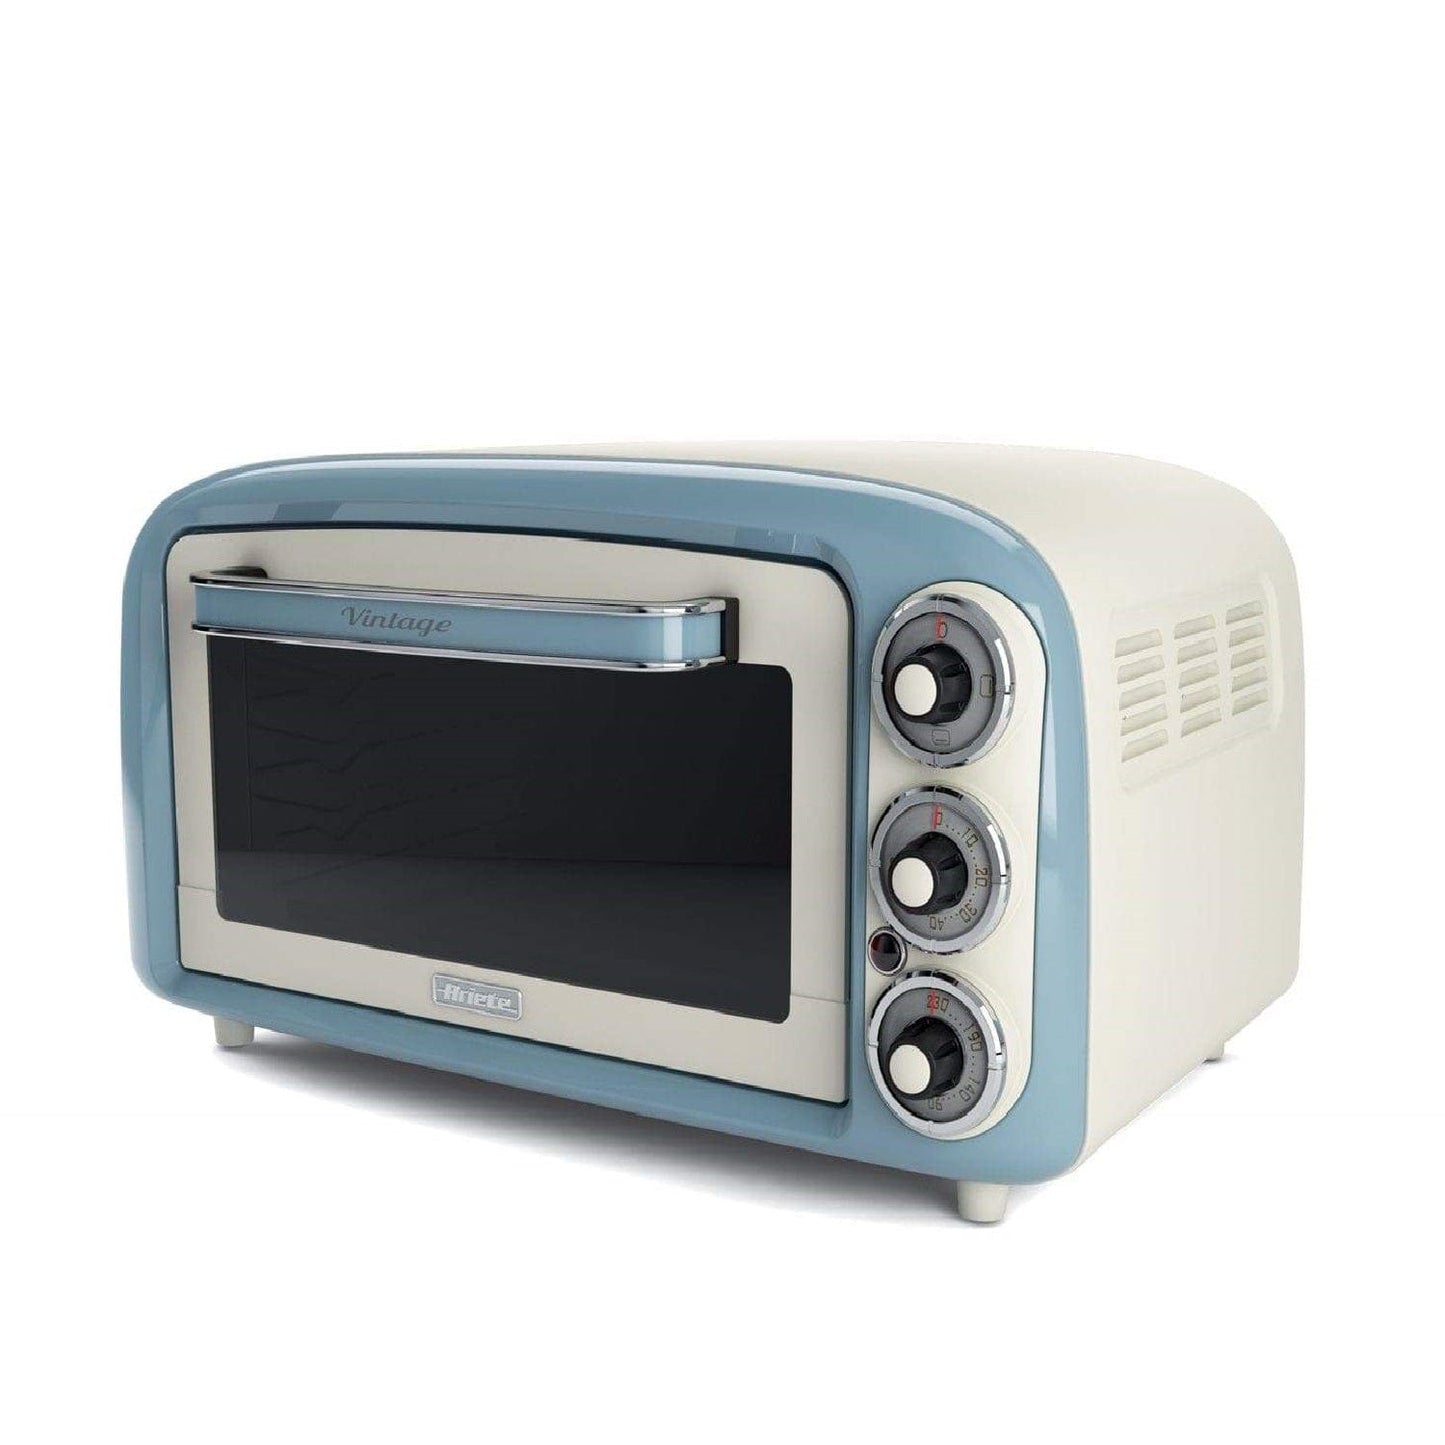 Ariete Appliances Ariete Vintage Oven, Cream/Blue 0979